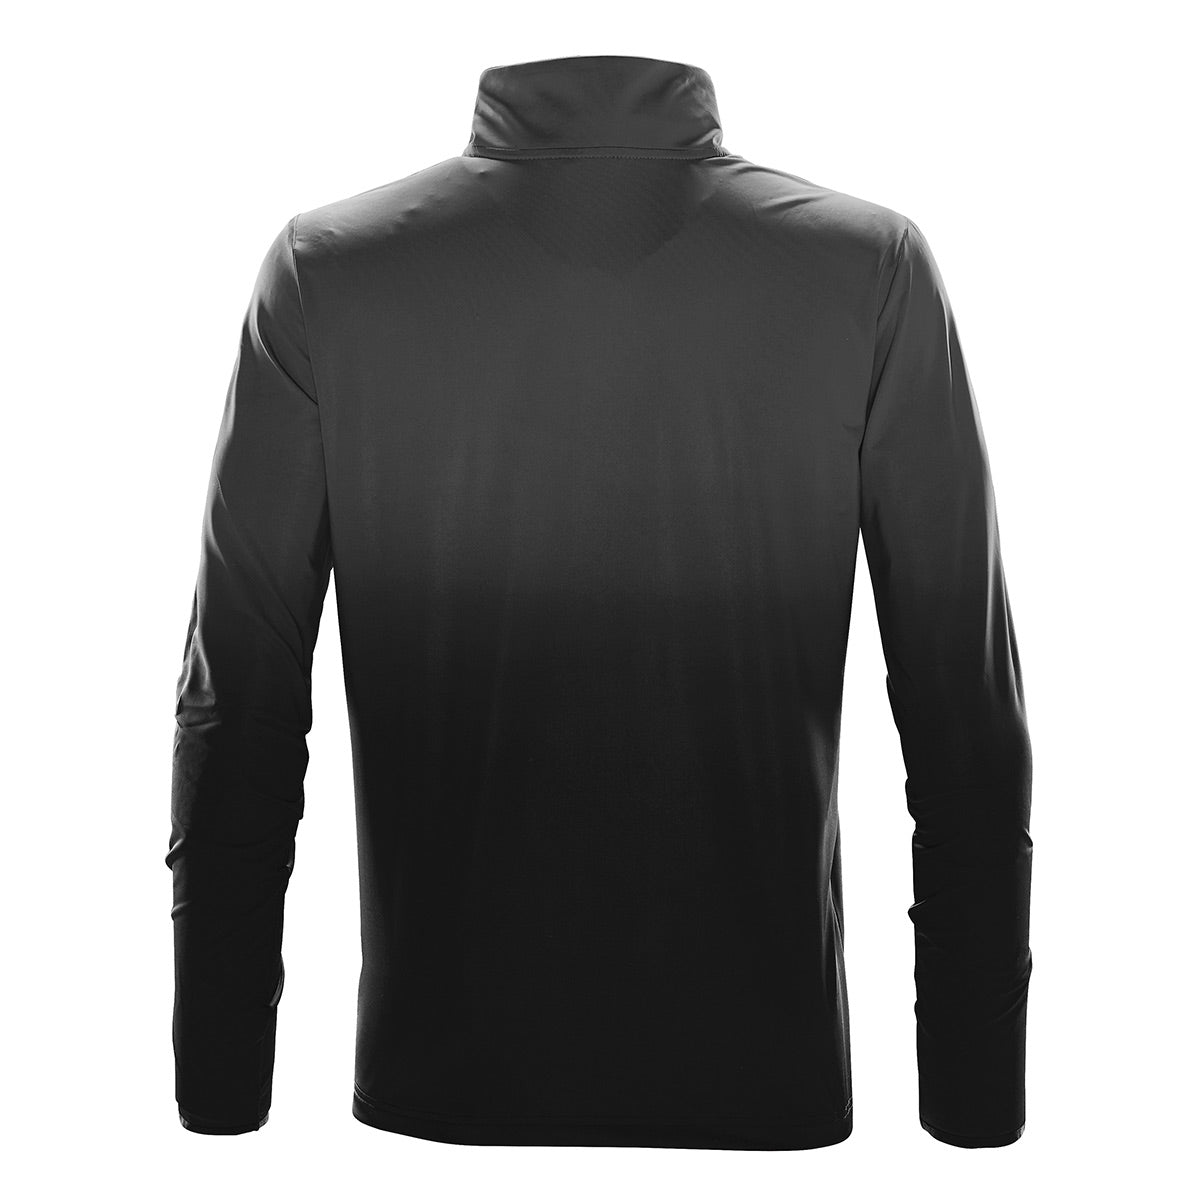 Men's Modern Hoodie - Long Sleeves in Black 4W Tech Stretch